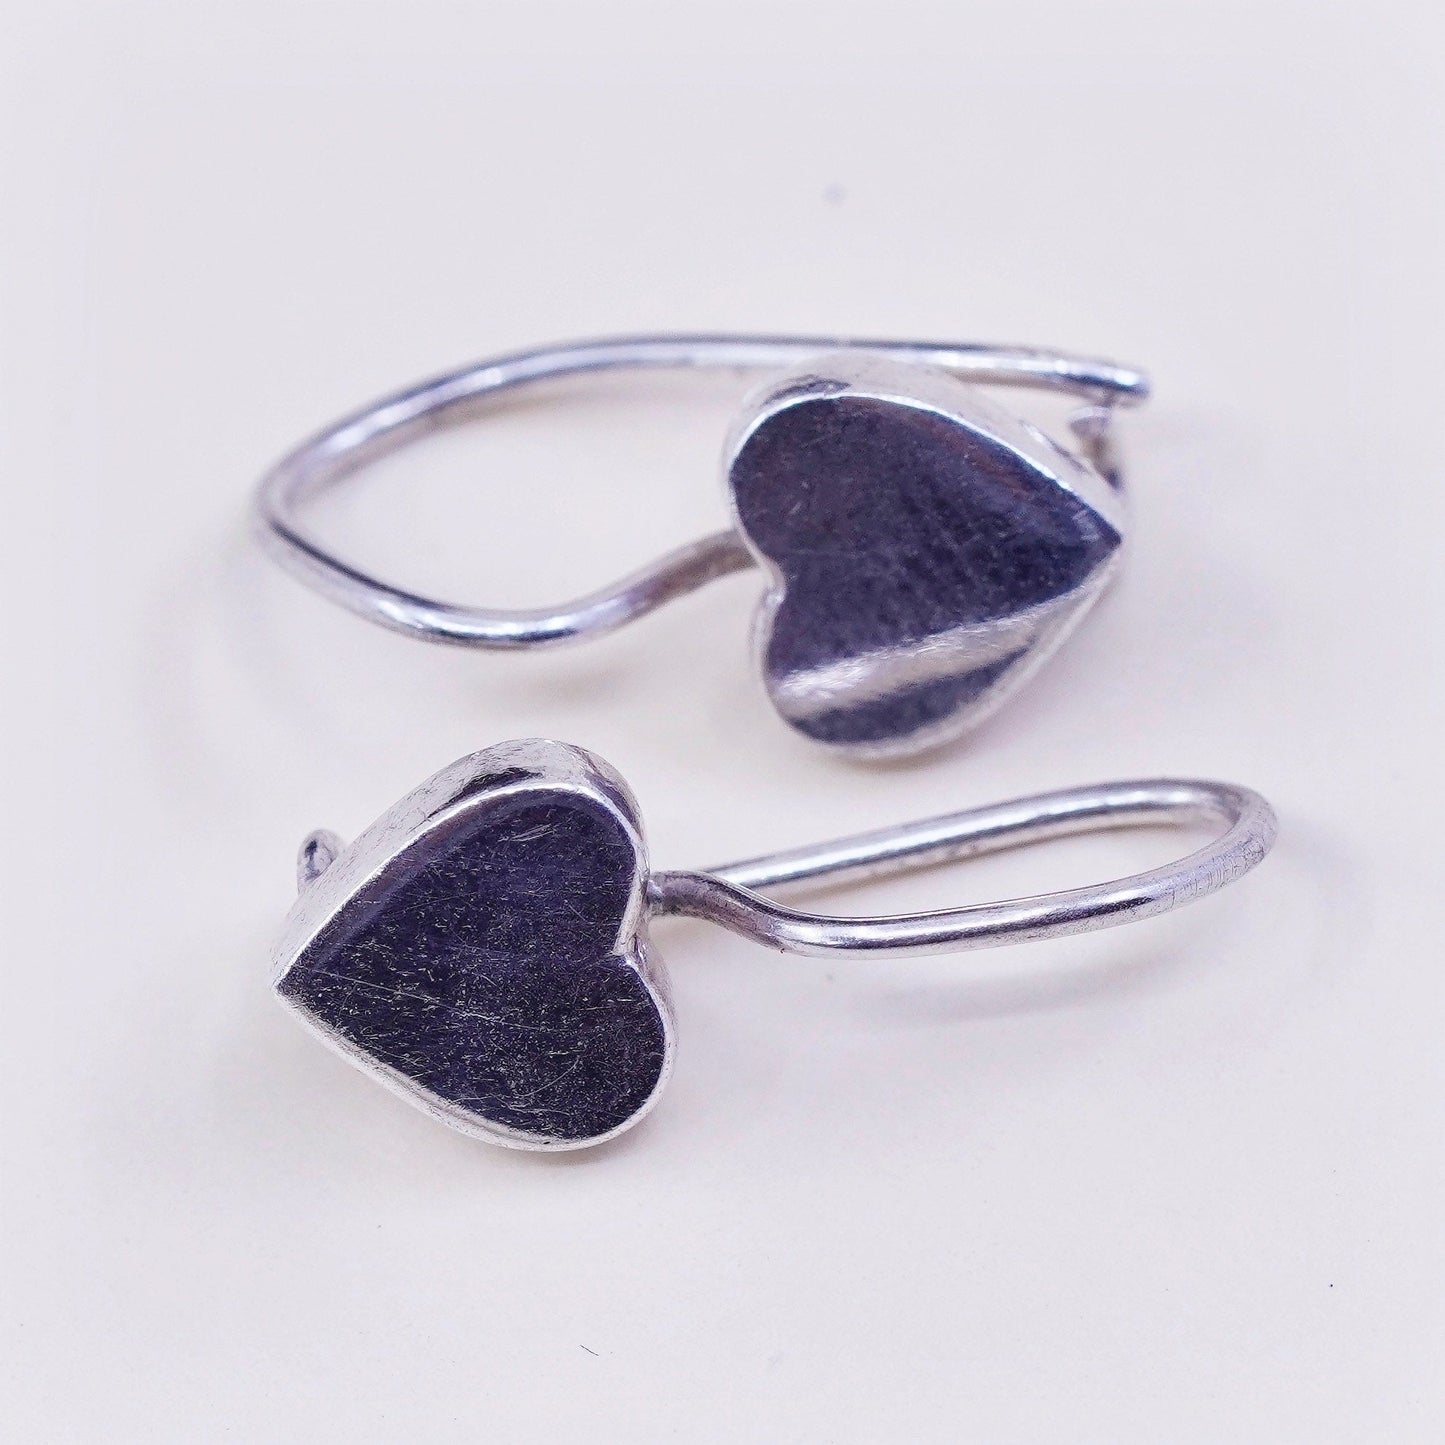 Vintage sterling 925 silver heart shaped drop earrings, stamped 925